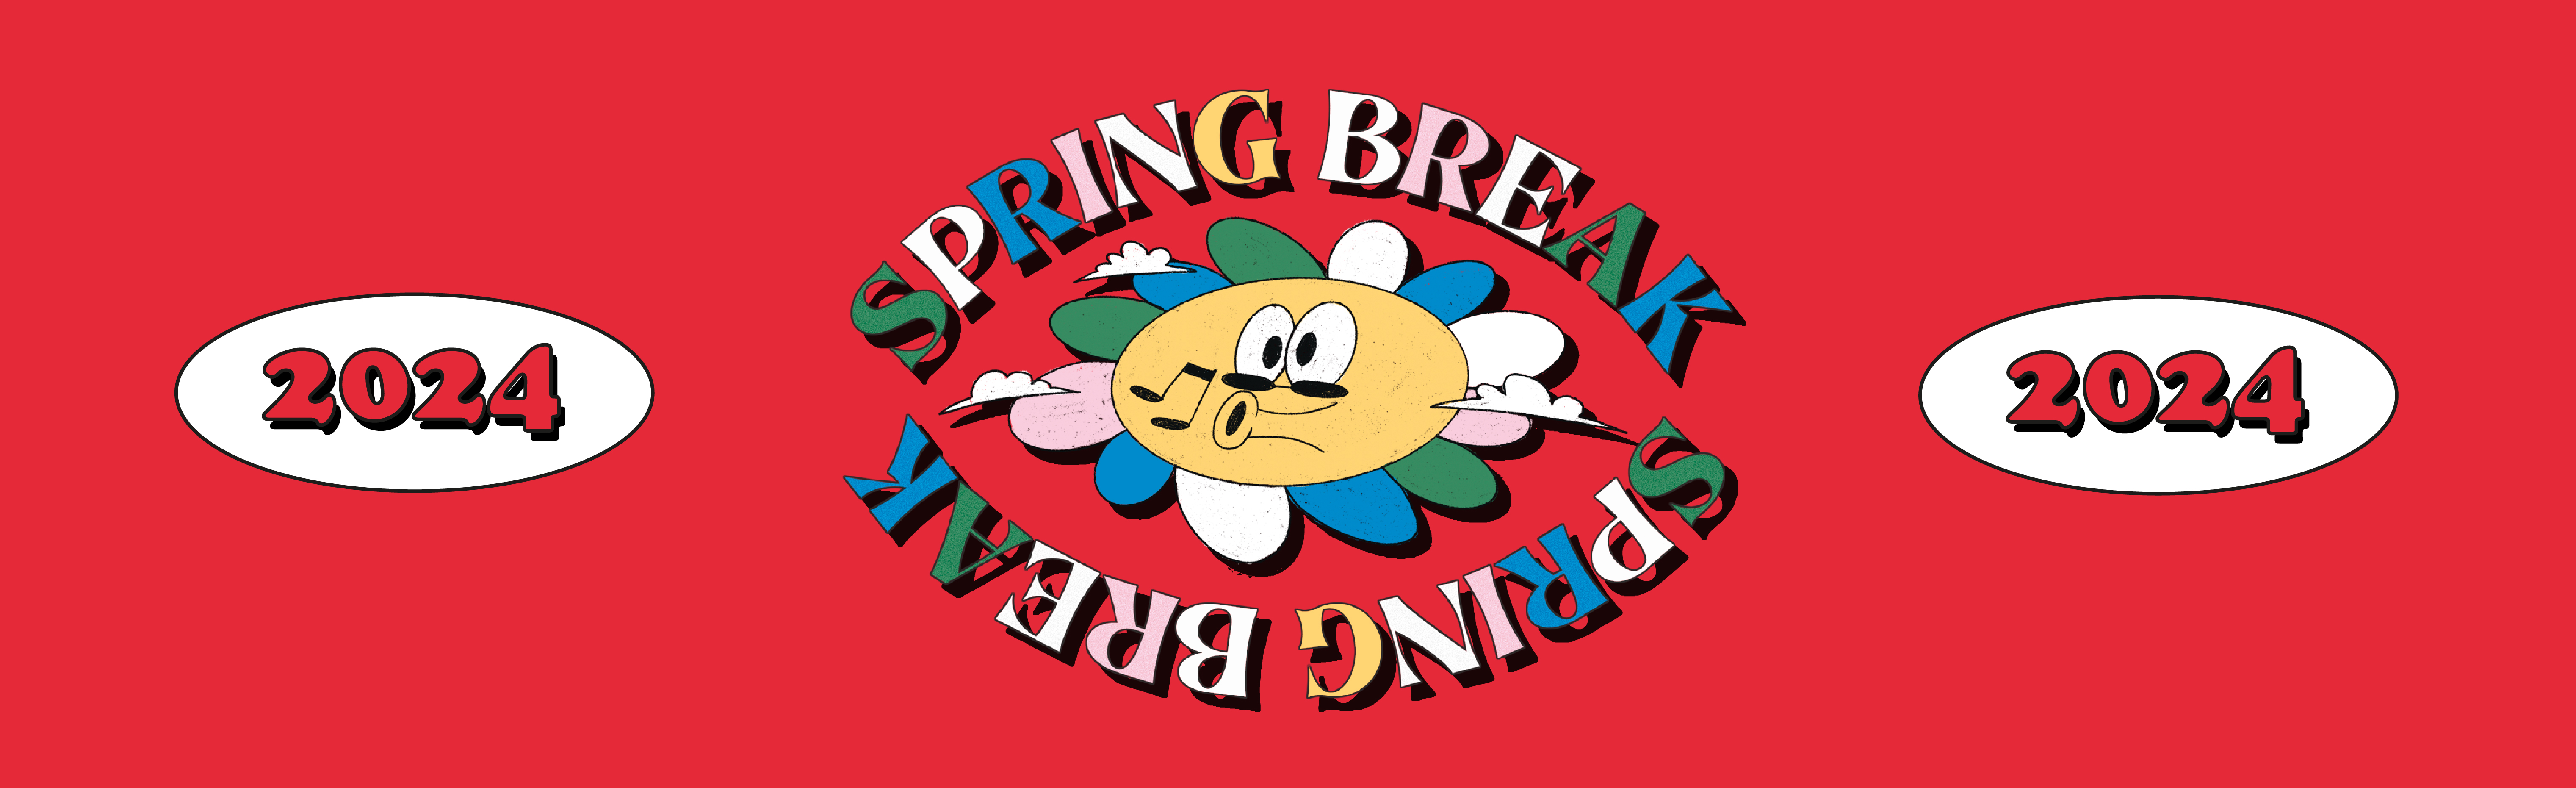 spring-break-punta-umbria-2024-650c4c56e82e74.25533048.jpeg